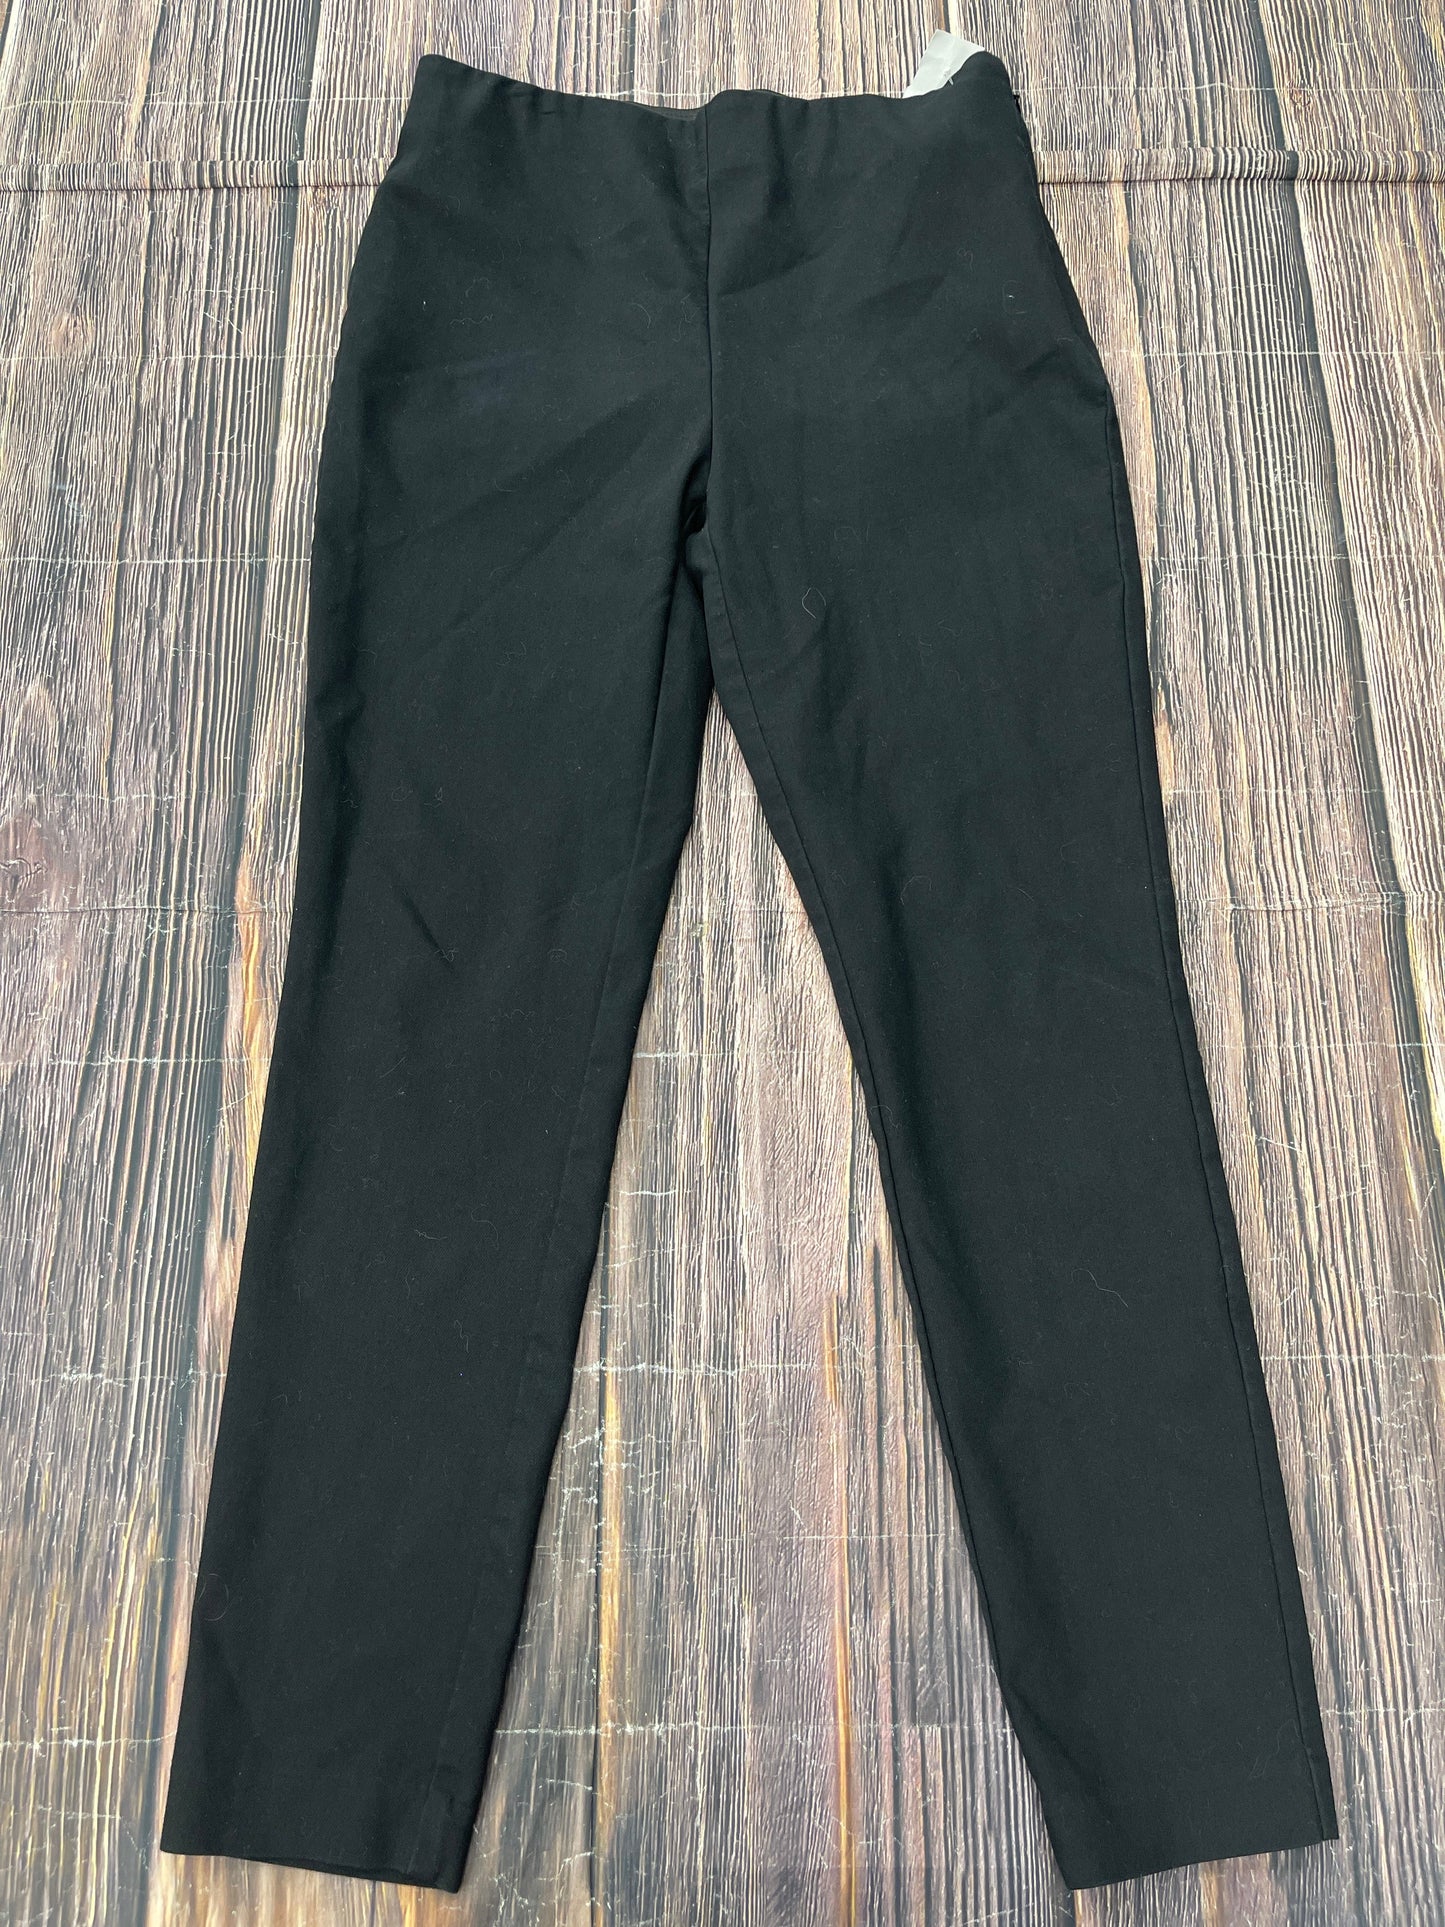 Black Pants Dress Loft, Size 8